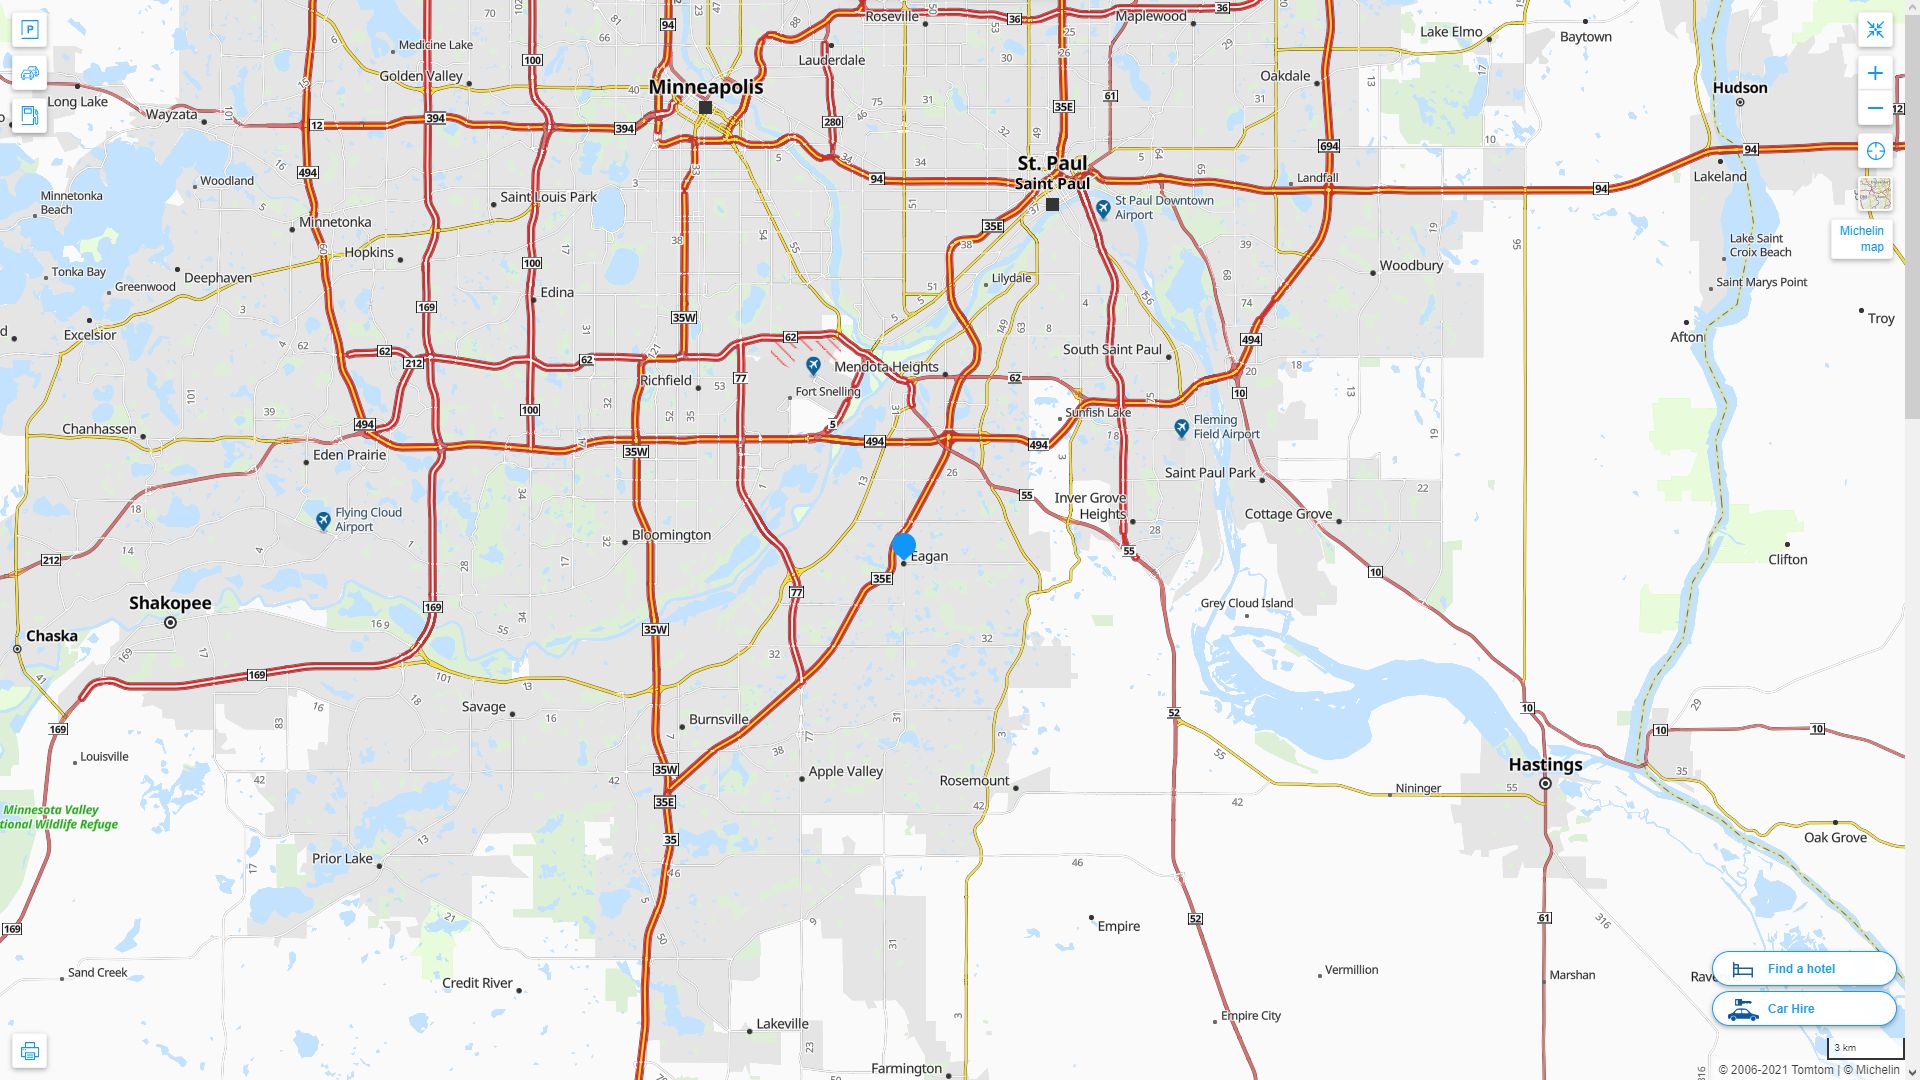 Eagan Minnesota Highway and Road Map